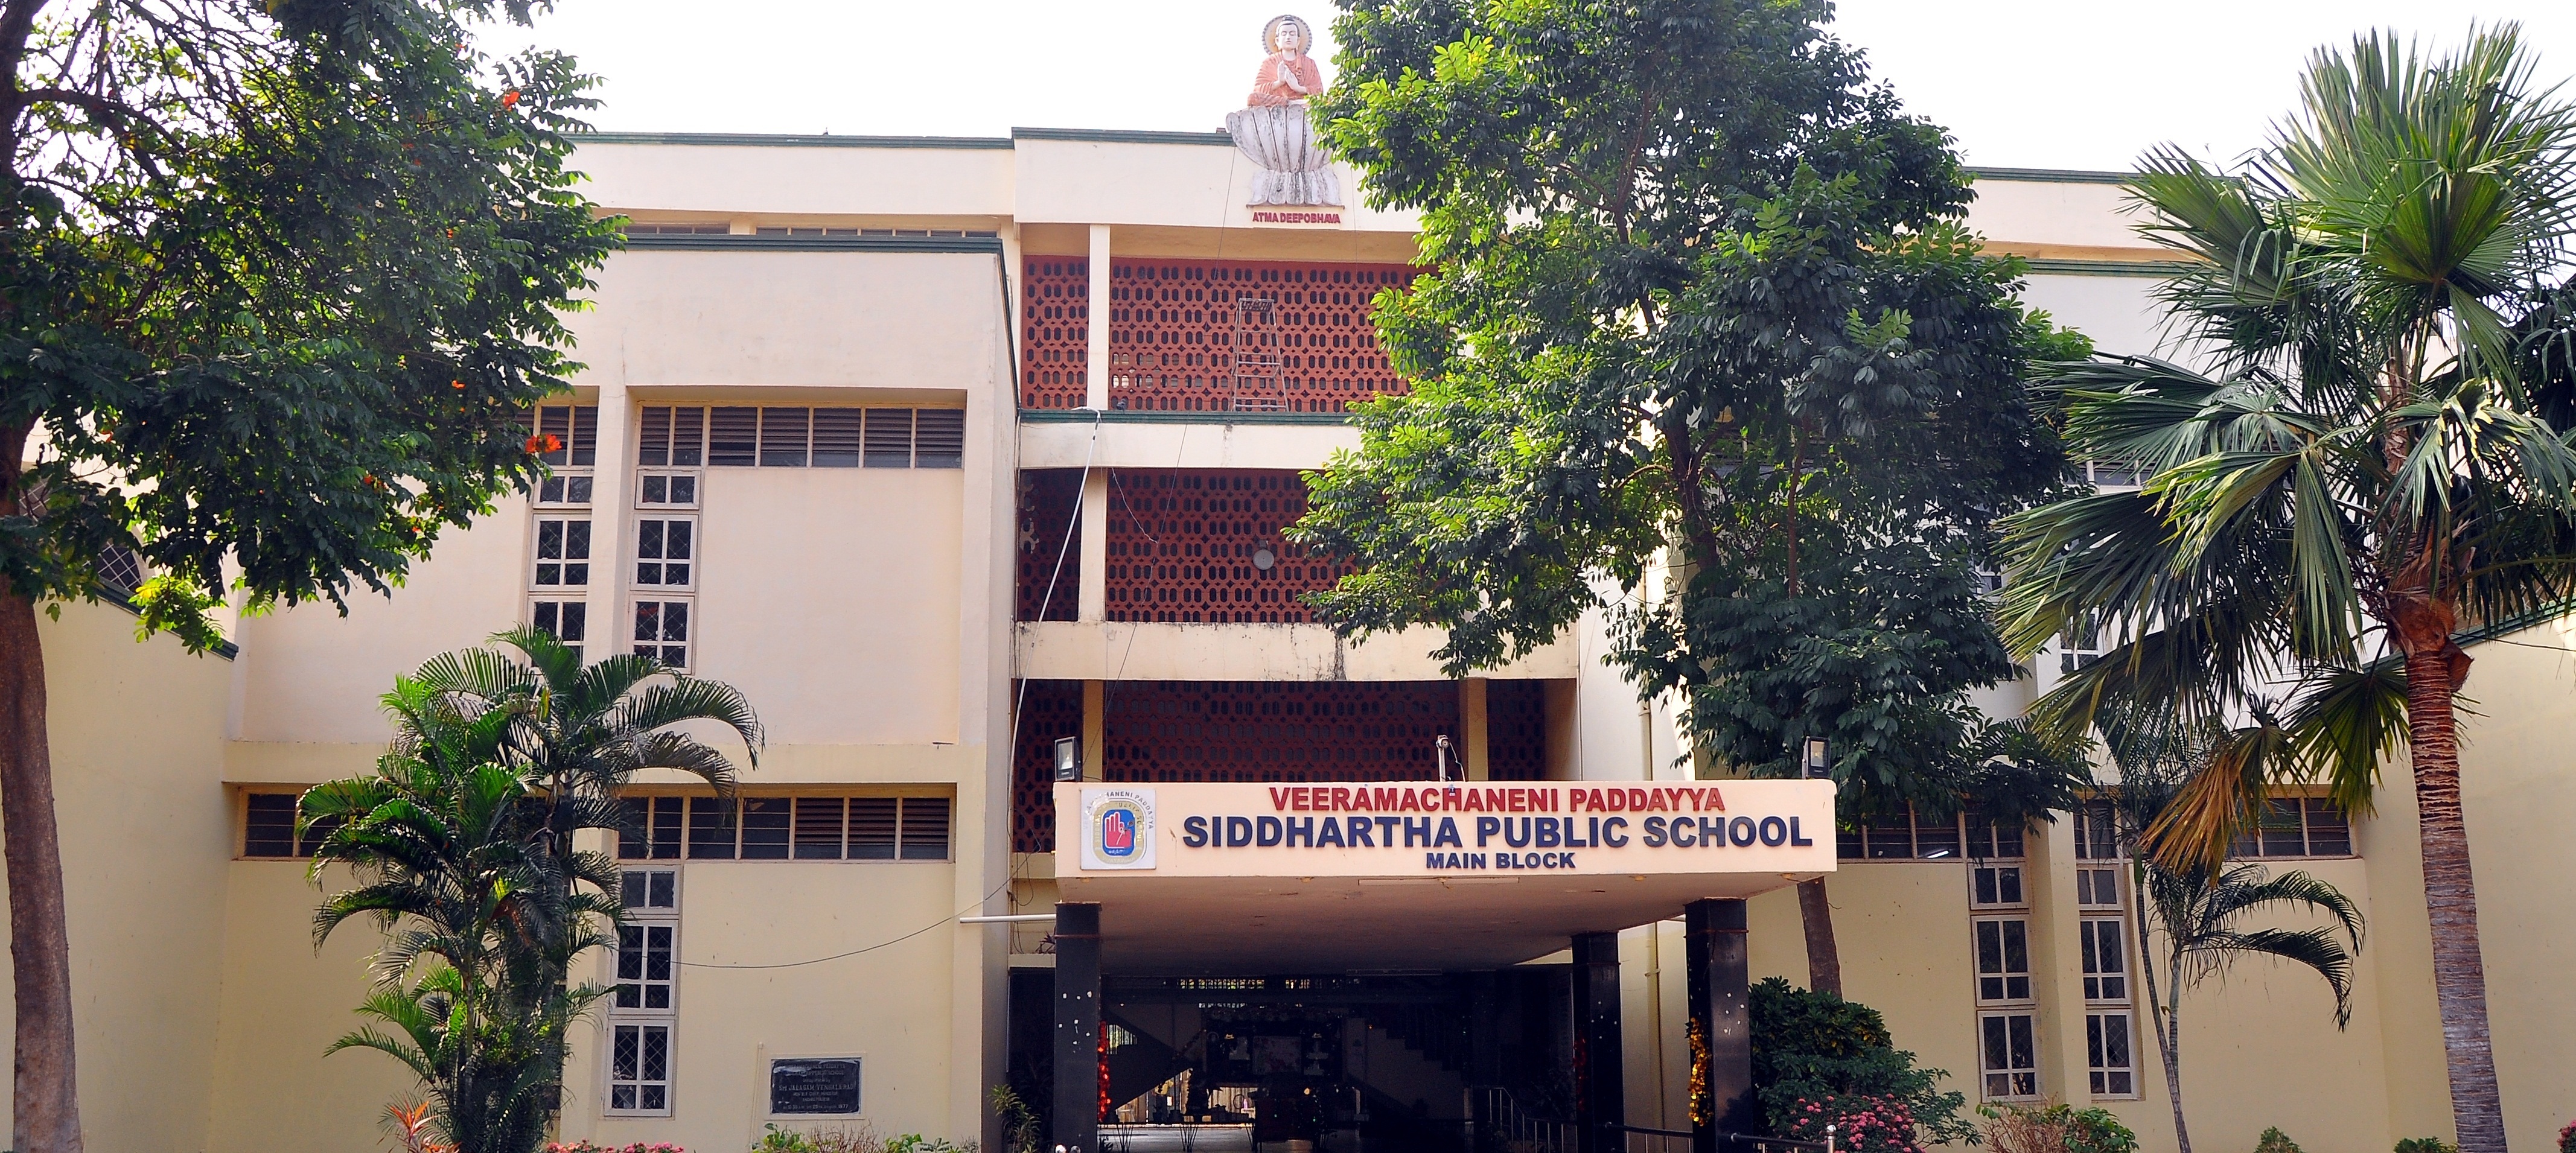 Top school in Vijayawada